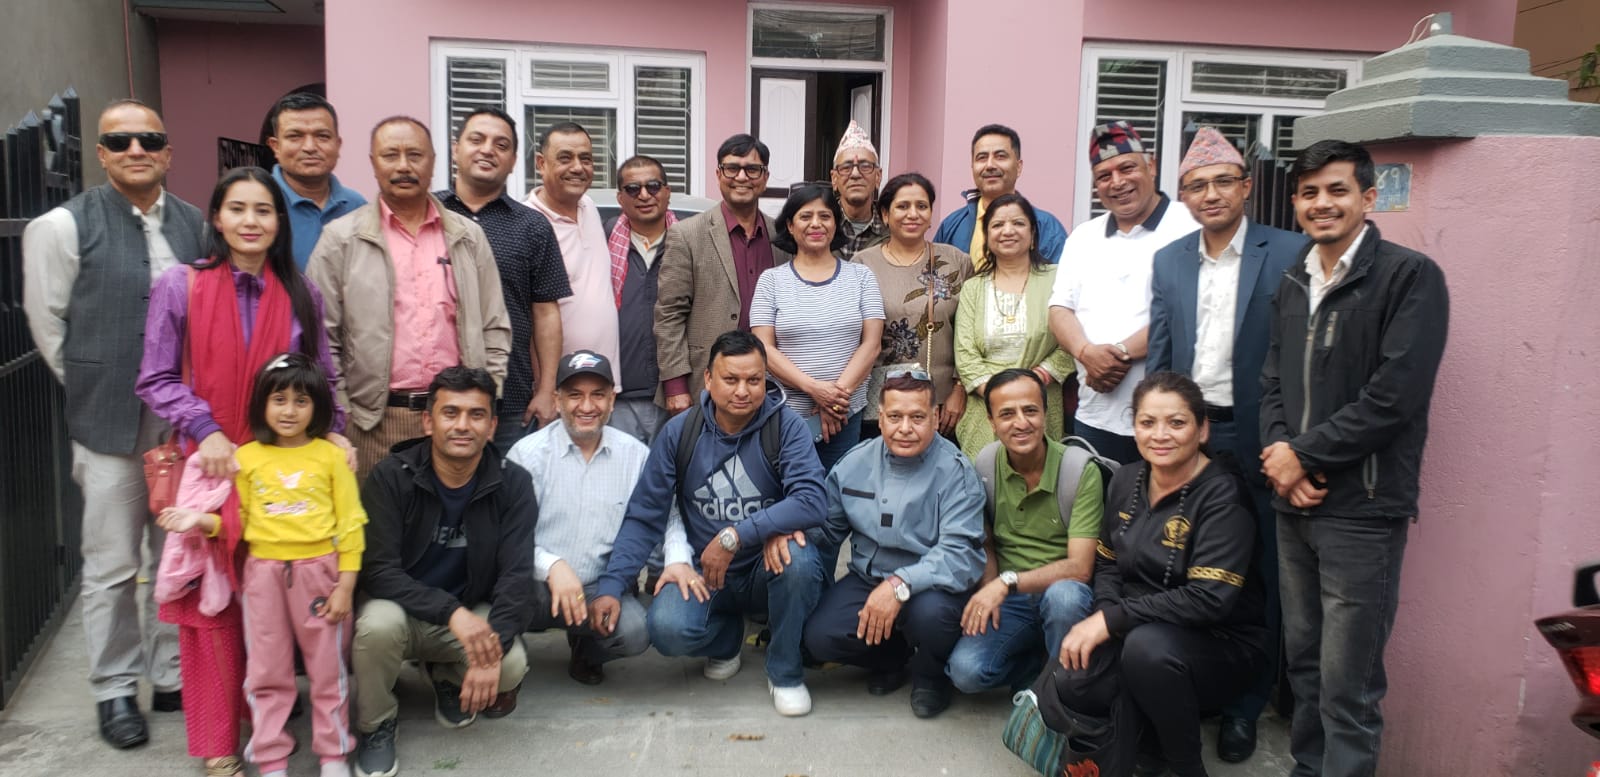 नेपाली कांग्रेस, झापा-काठमाडौं सम्पर्क समितिको अधिवेशन बैशाख २९ गते